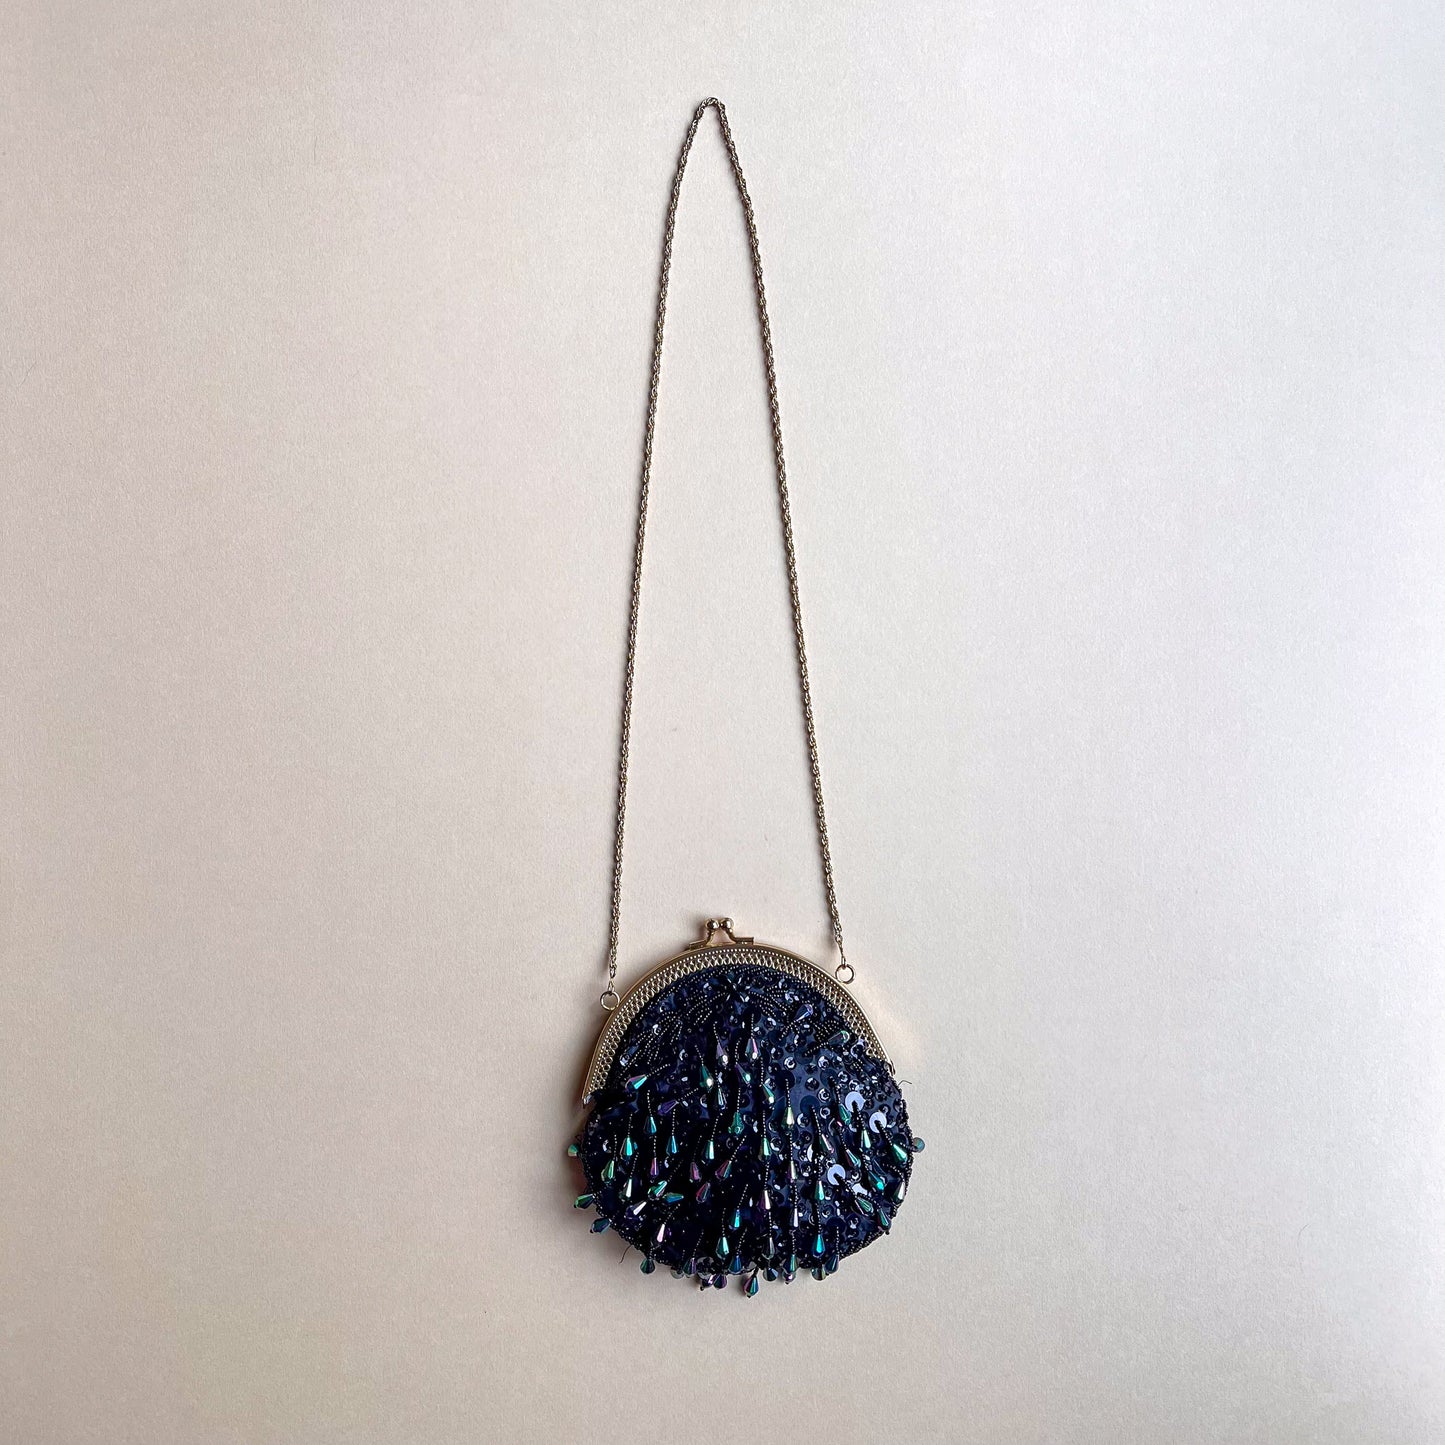 1980s Black Handbag With Iridescent Beading